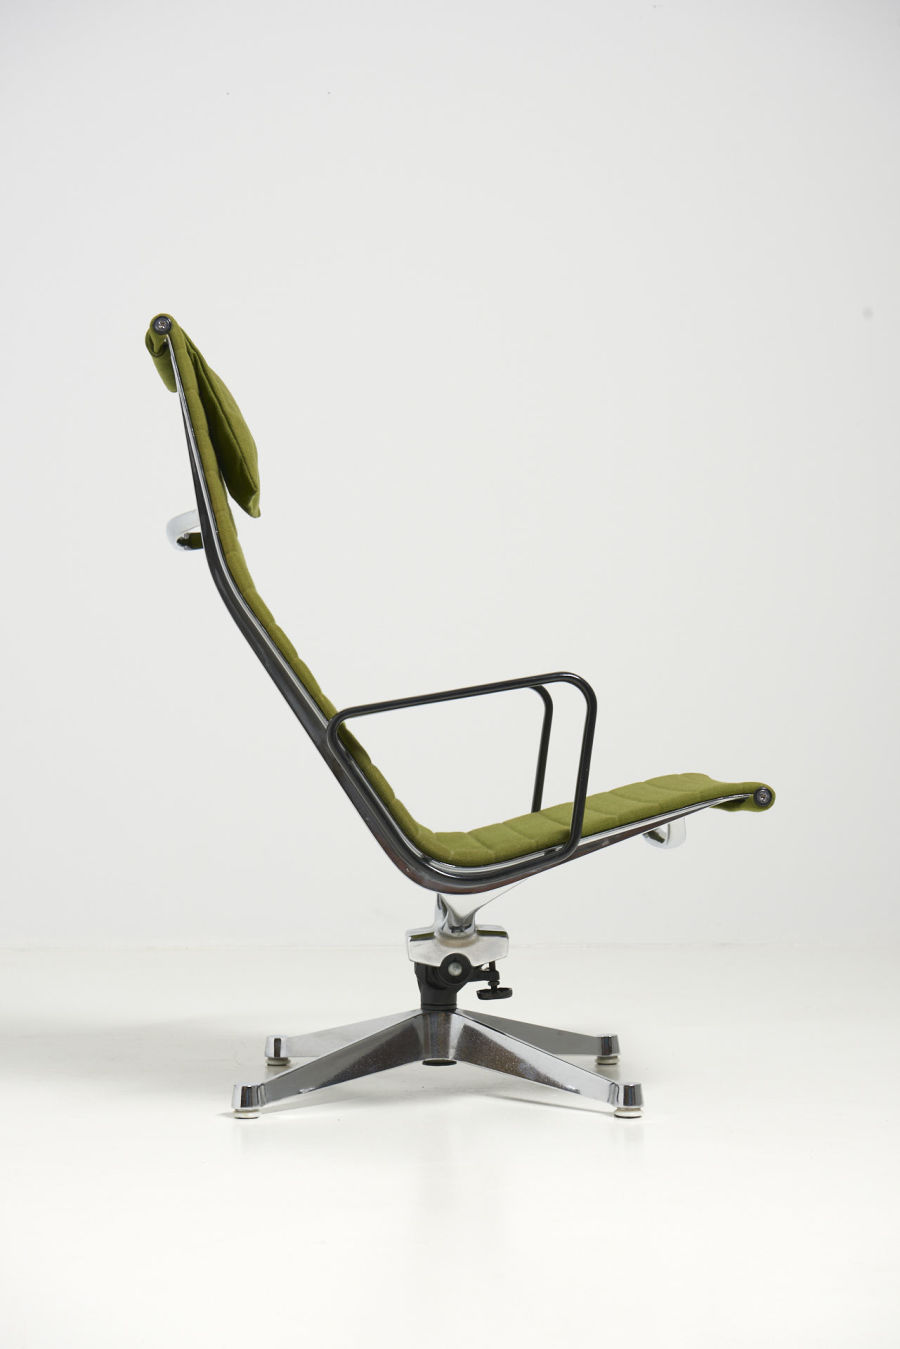 modestfurniture-vintage-3081-ea124-lounge-chair-eames-herman-miller03